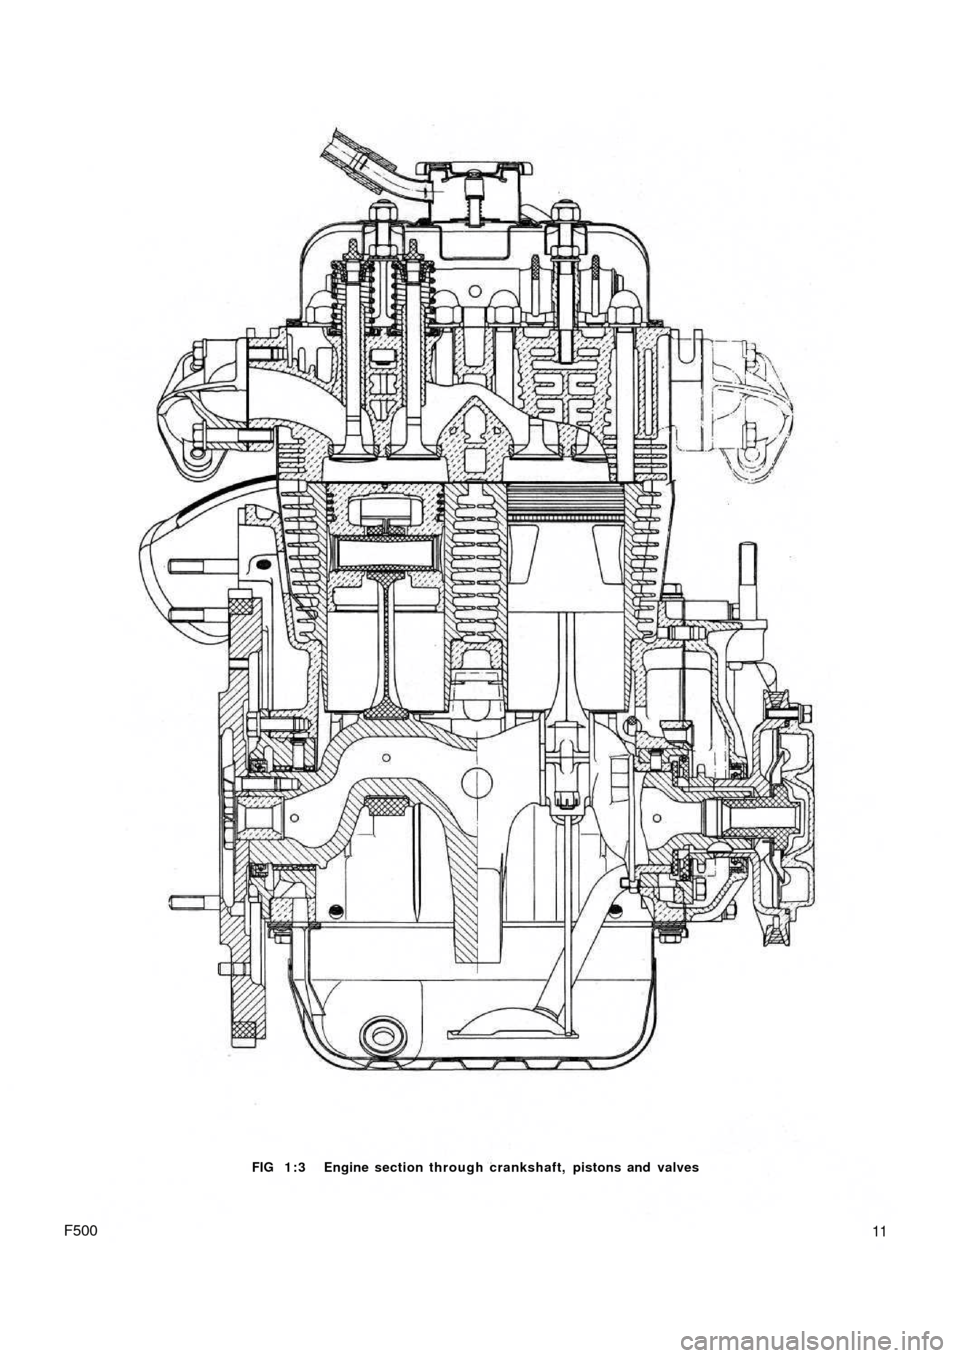 FIAT 500 1968 1.G Workshop Manual FIG 1 : 3  Engine section through crankshaft, pistons and  valves
F50011 